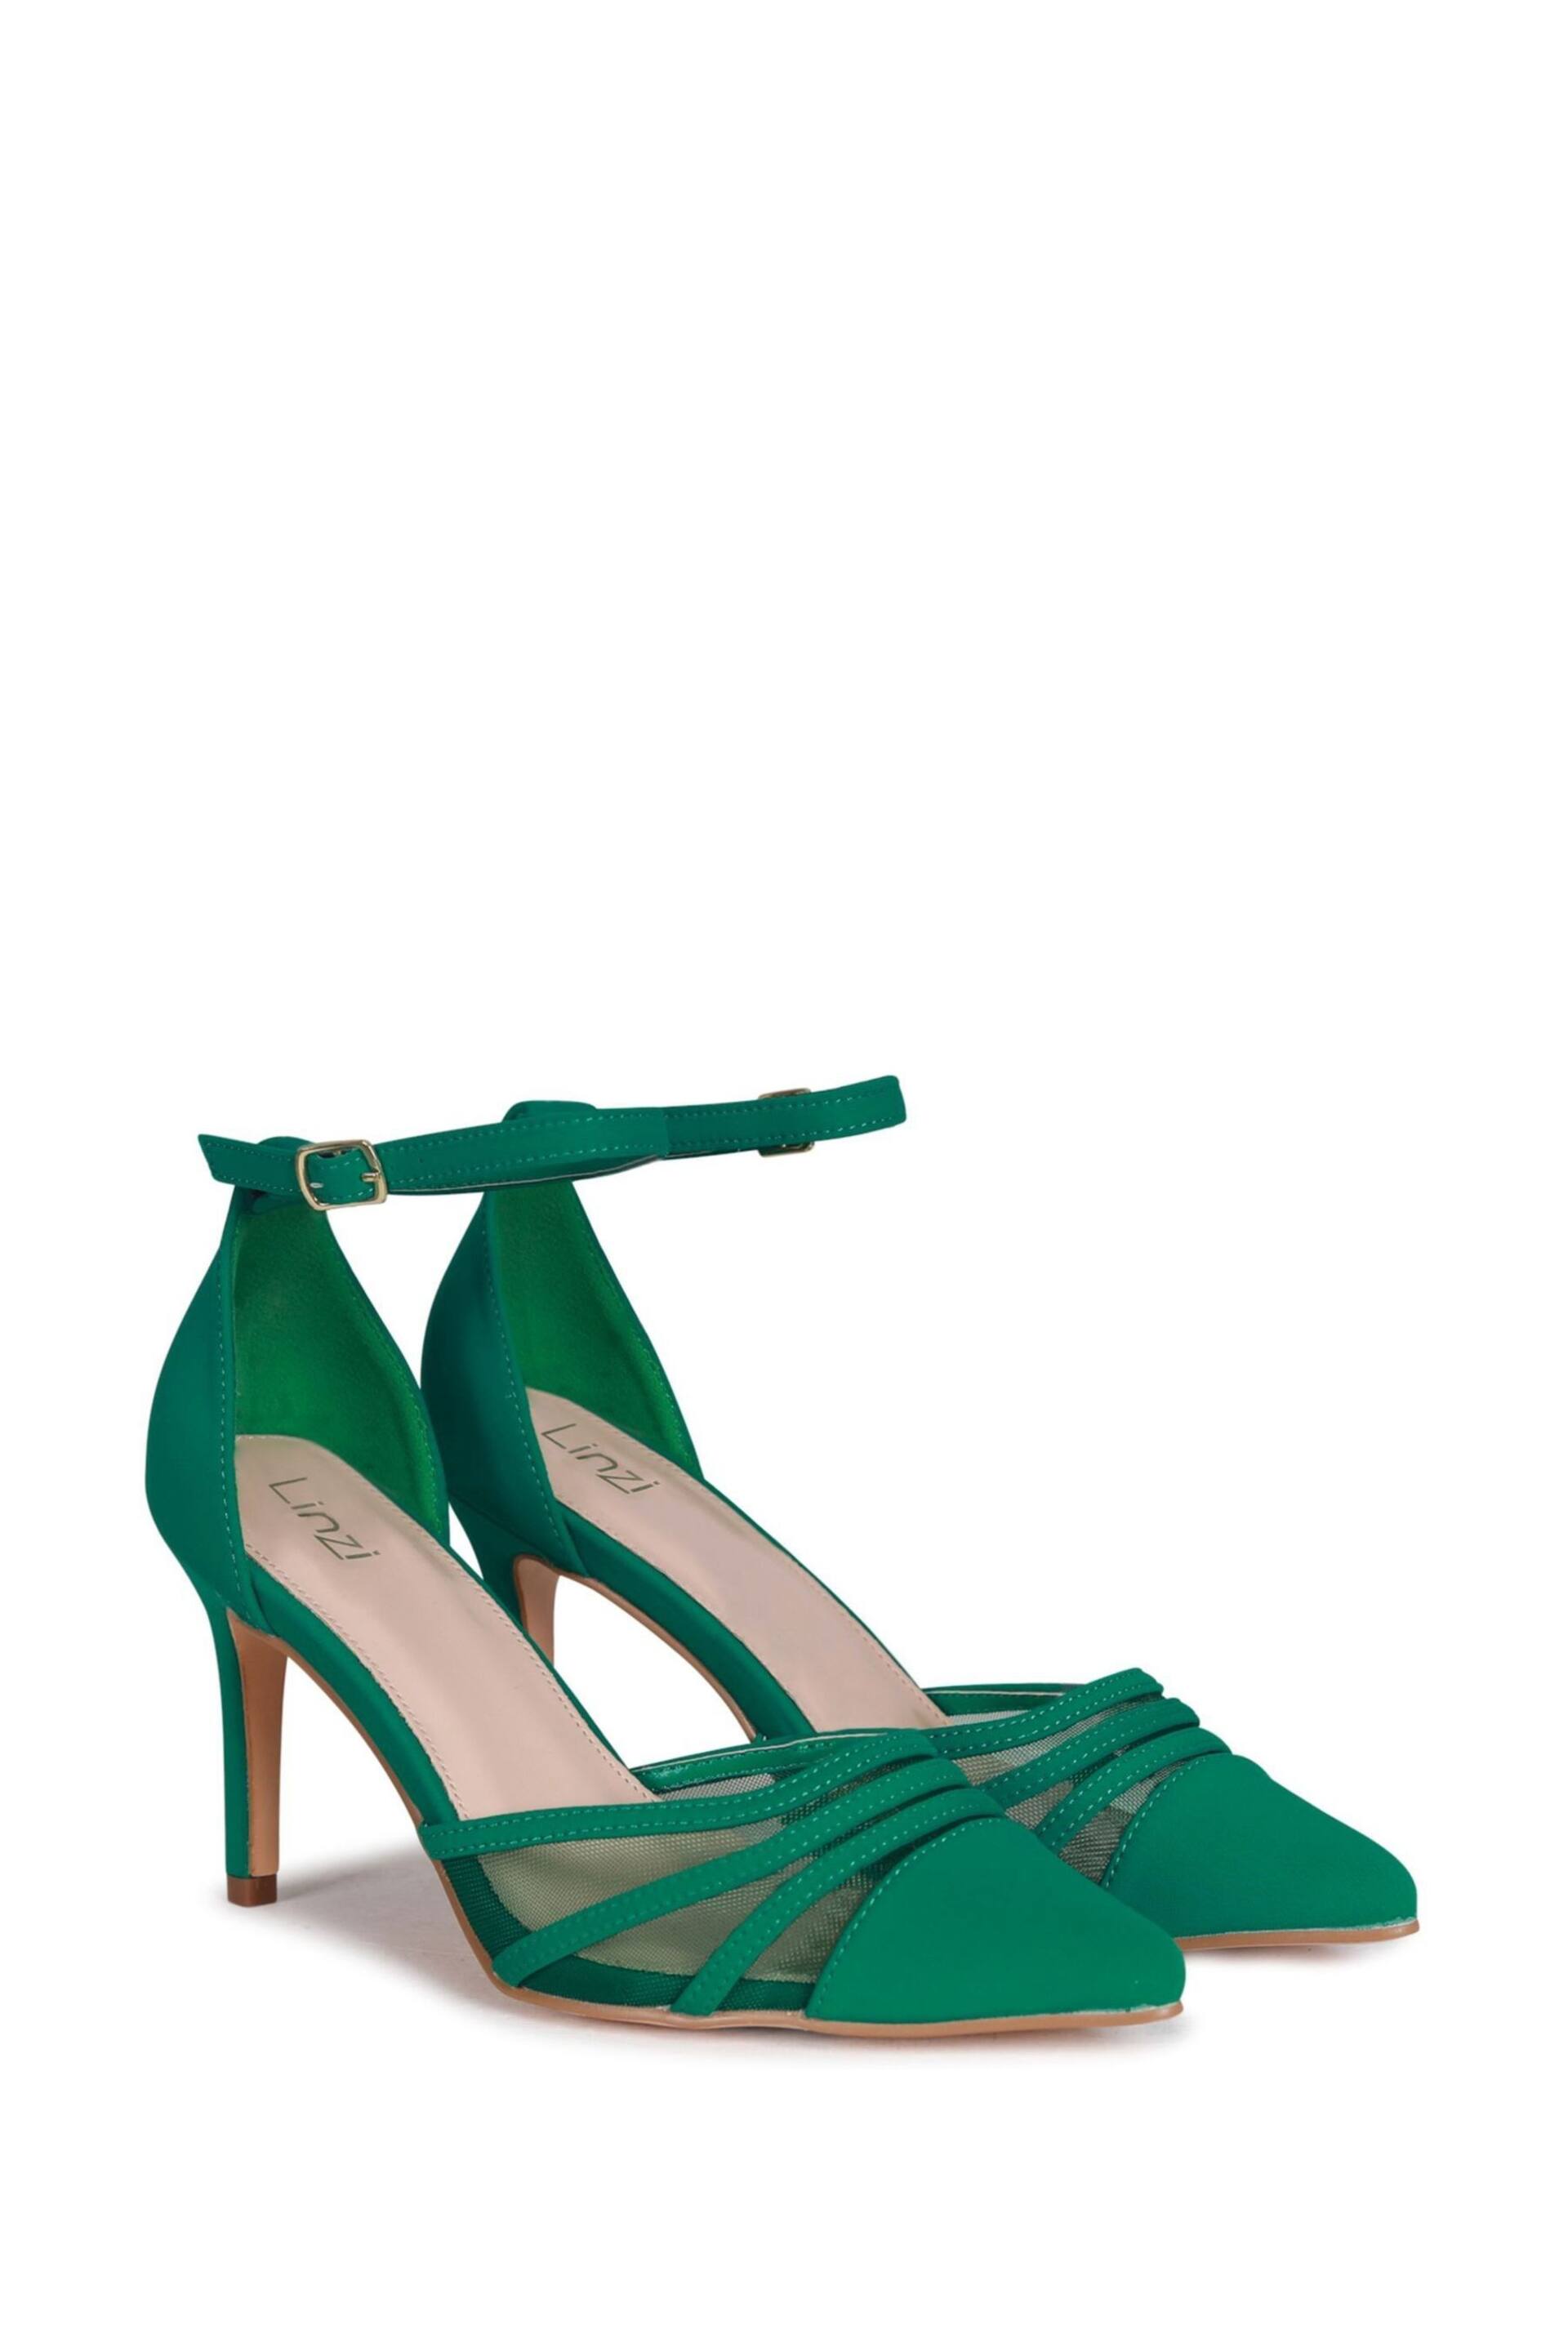 Linzi Green Serri Court Stiletto Heels With Mesh Front Detail - Image 3 of 4